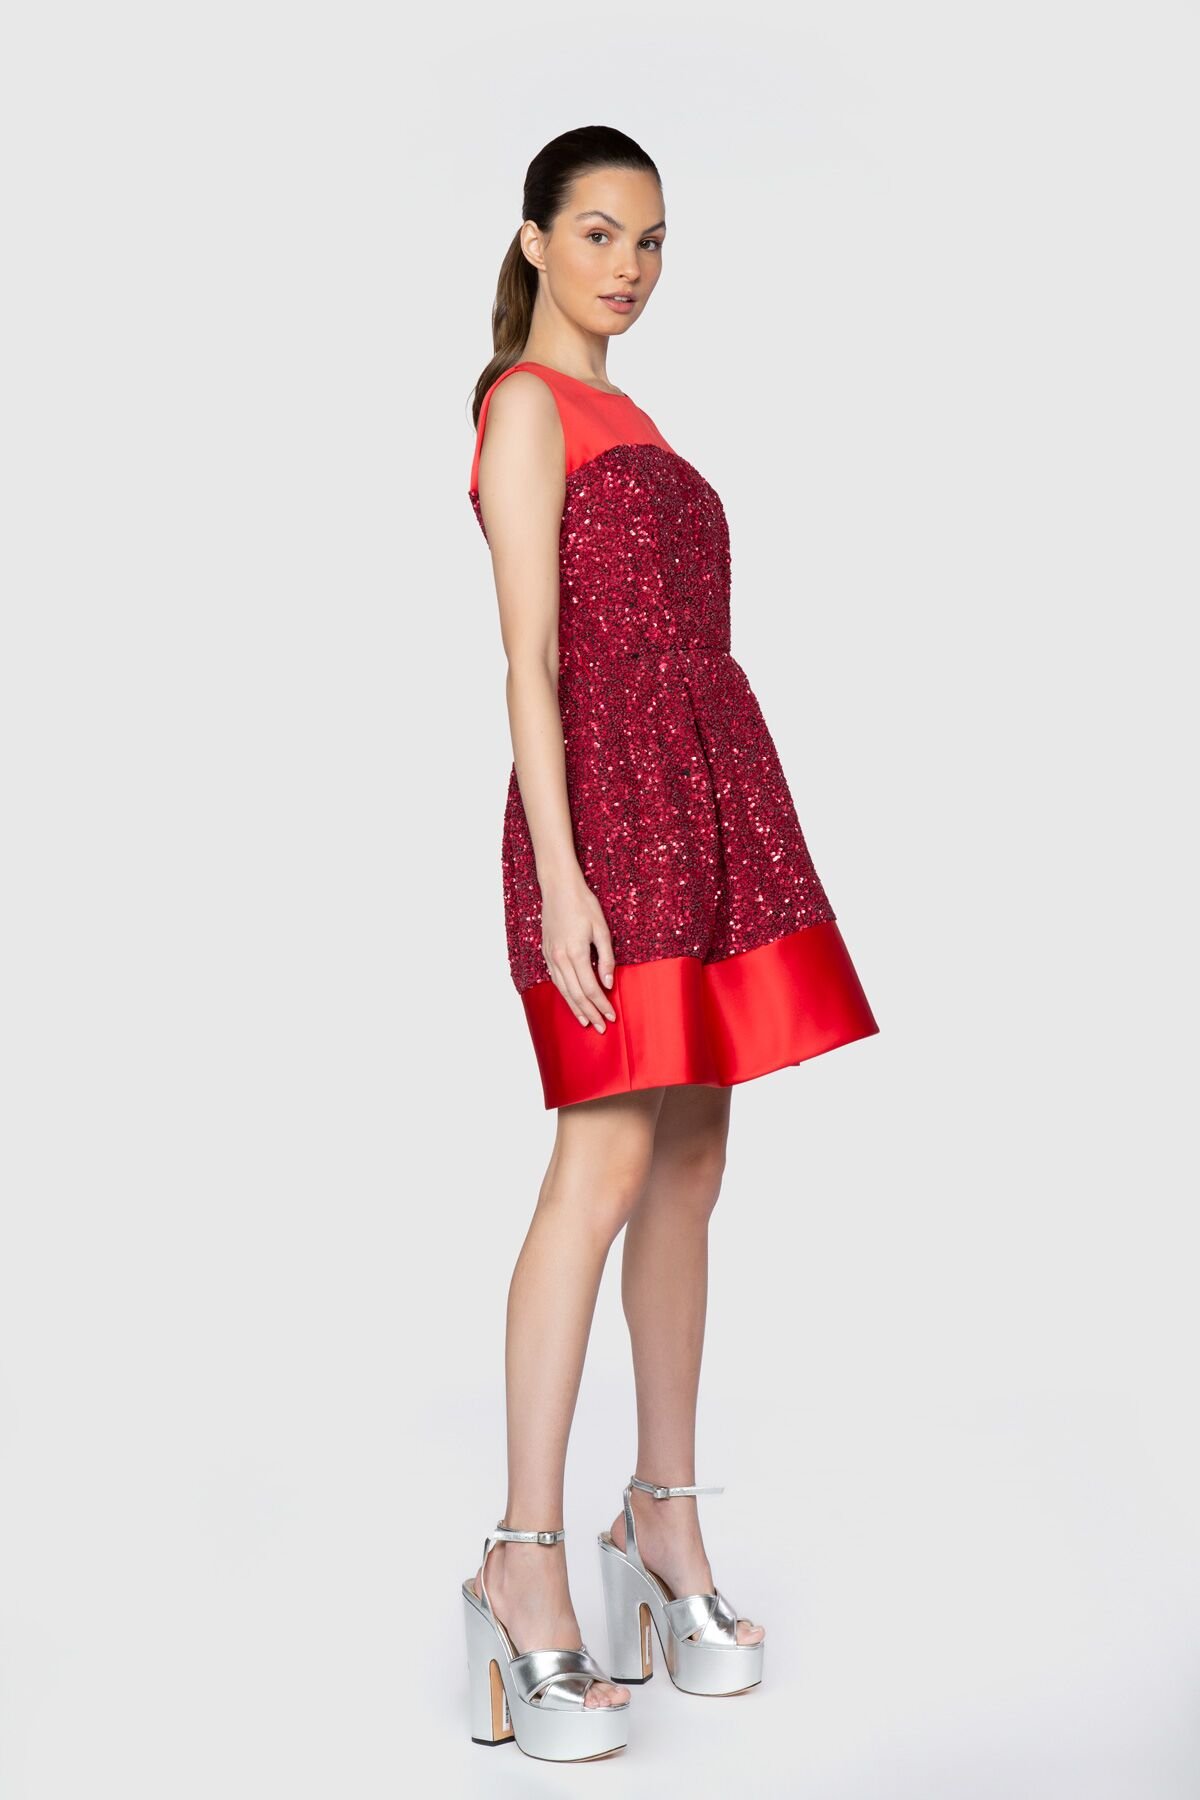 Contrast Fabric Garnish Mini Red Party Dress